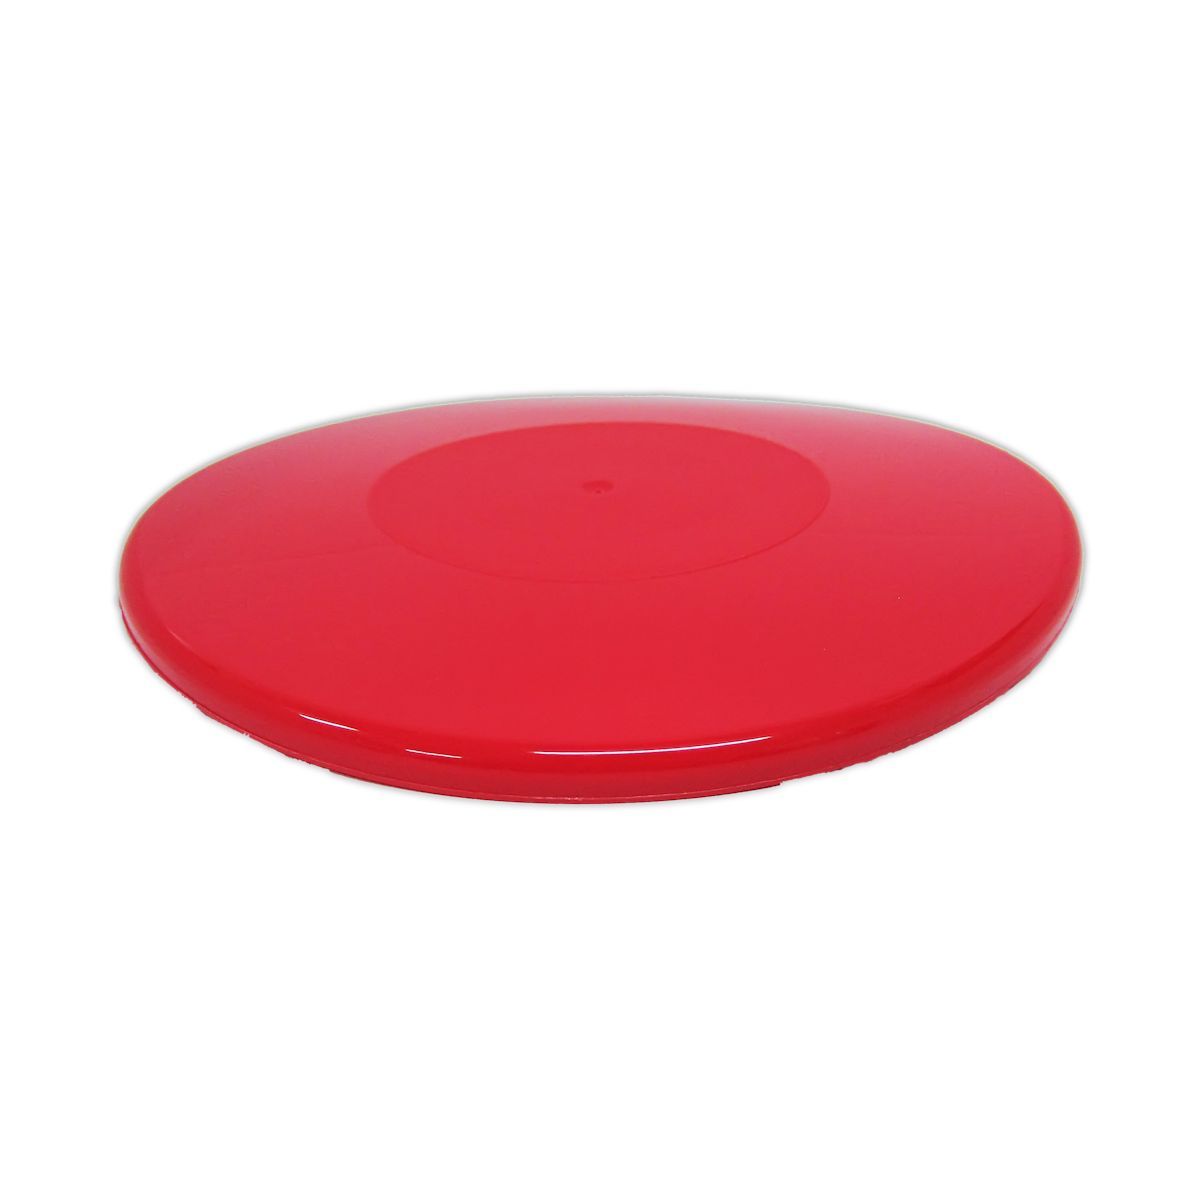 PUDB1425L - 1/4lb Red Pudding Bowl Lids x 25